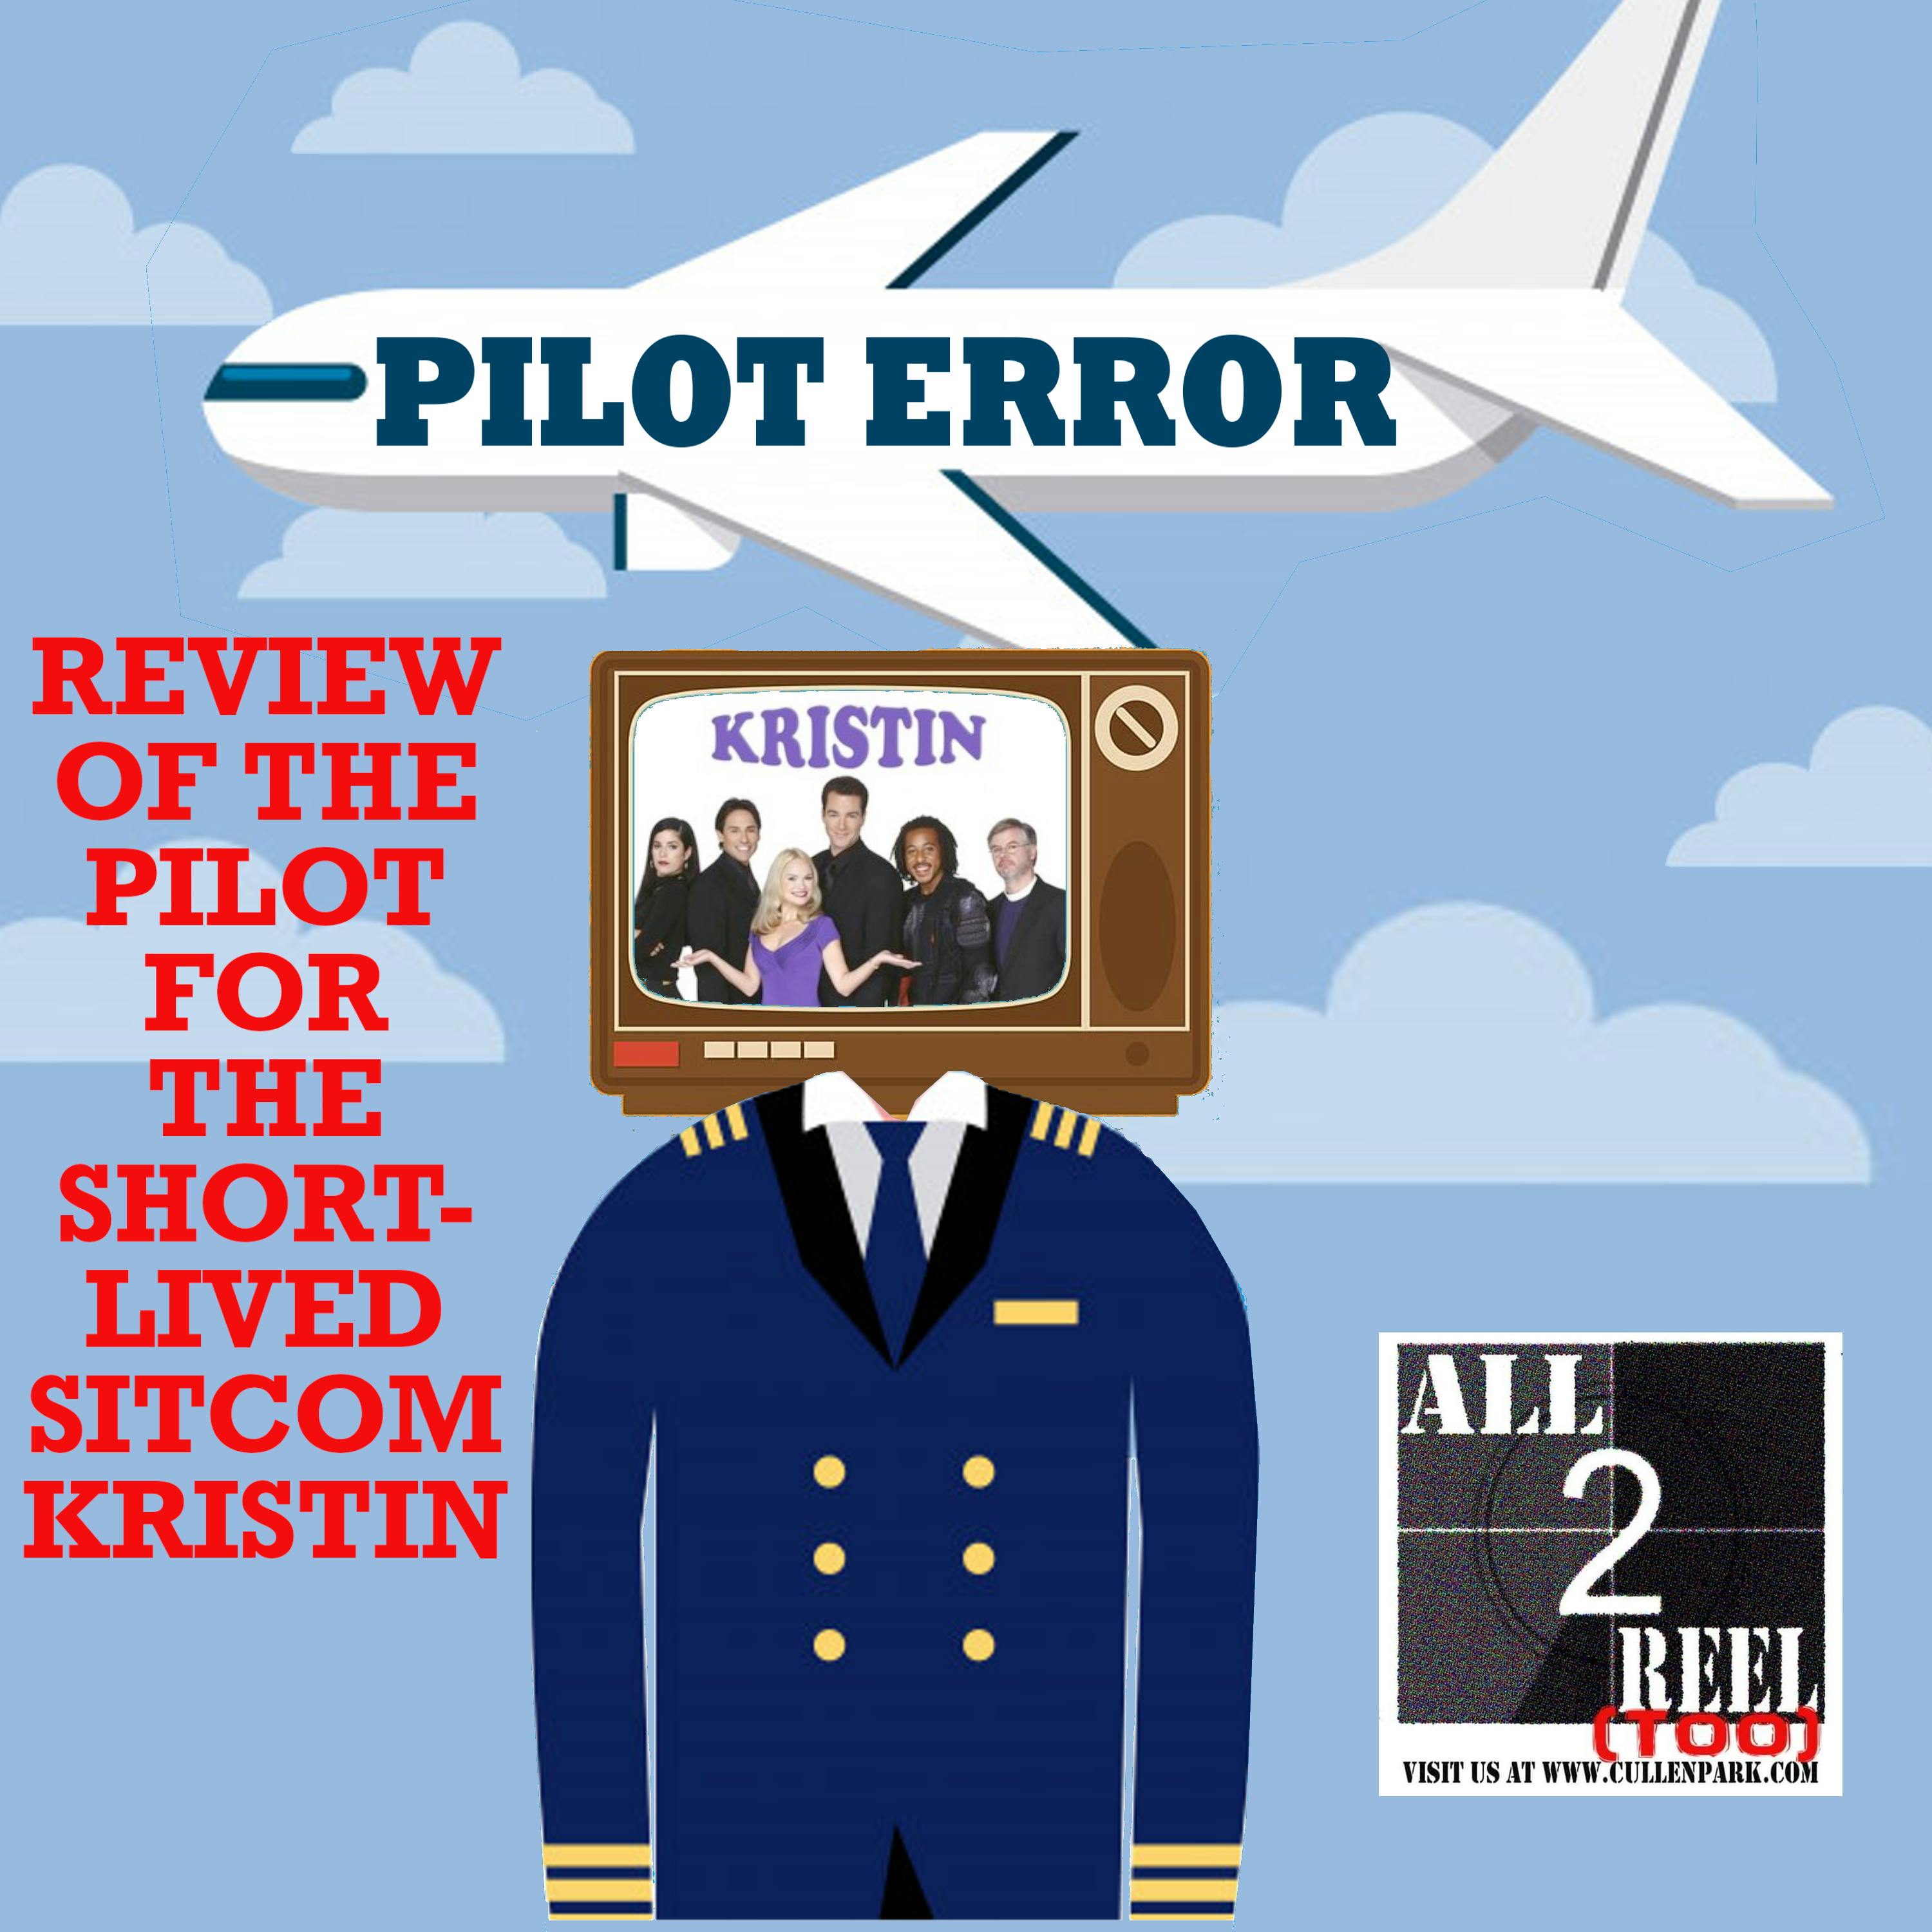 Kristin (2001) - PILOT ERROR REVIEW Image